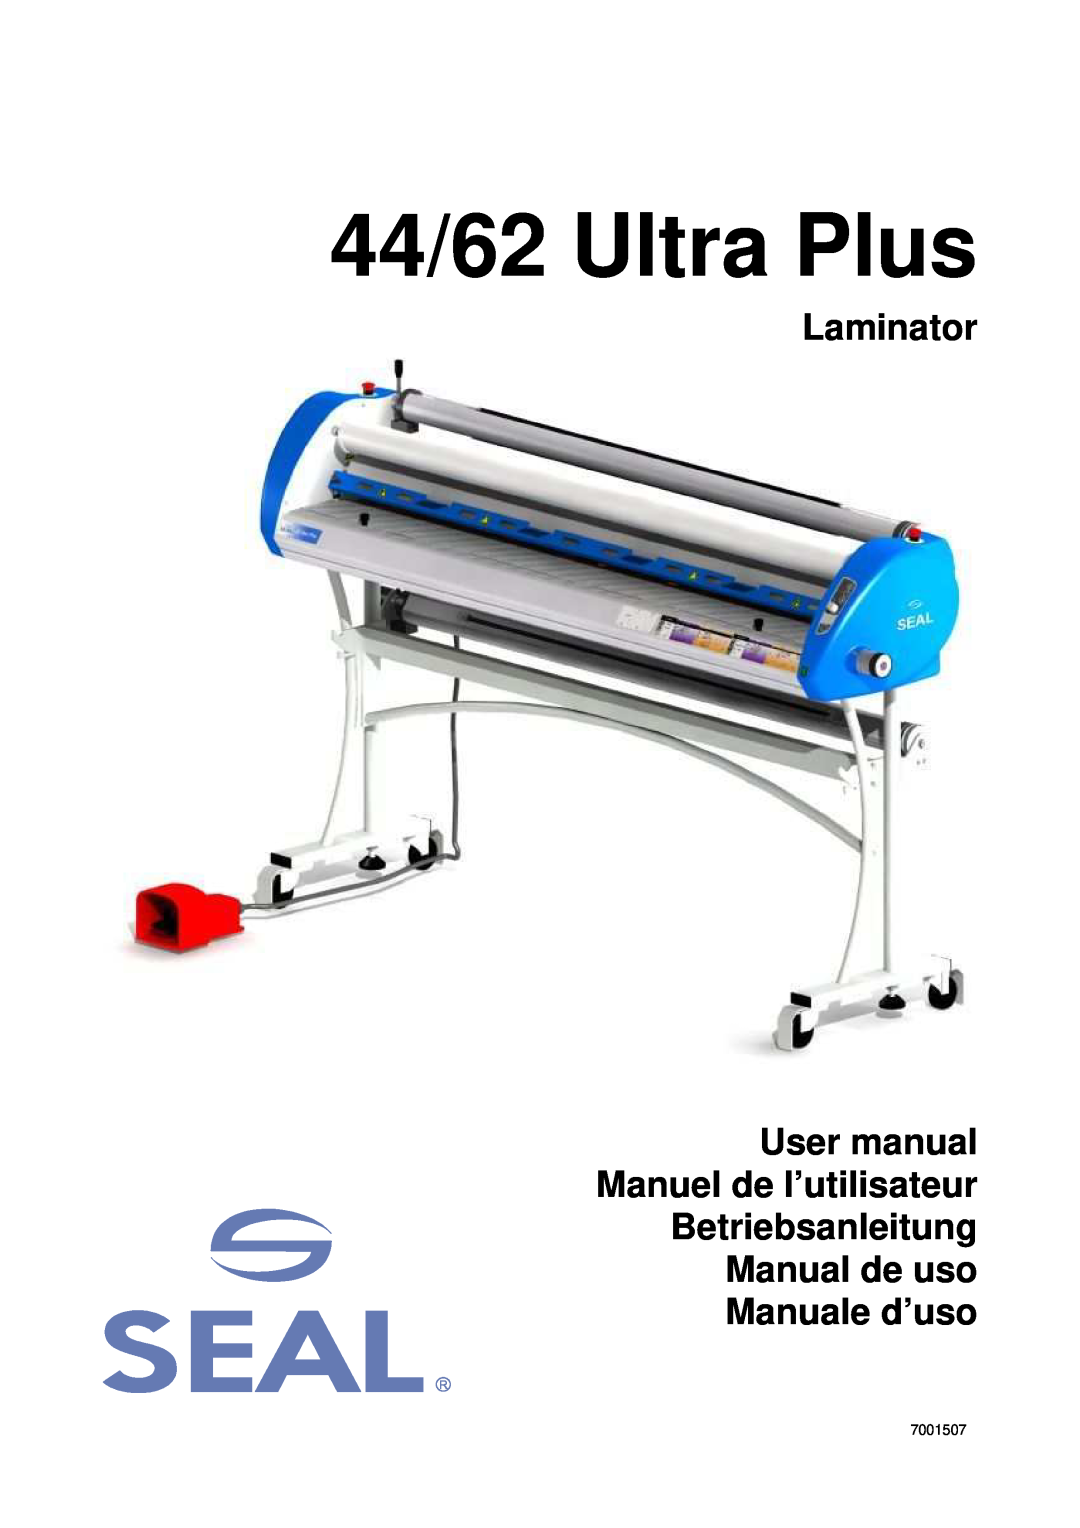 SEAL user manual 44/62 Ultra Plus, Laminator User manual Manuel de l’utilisateur Betriebsanleitung 